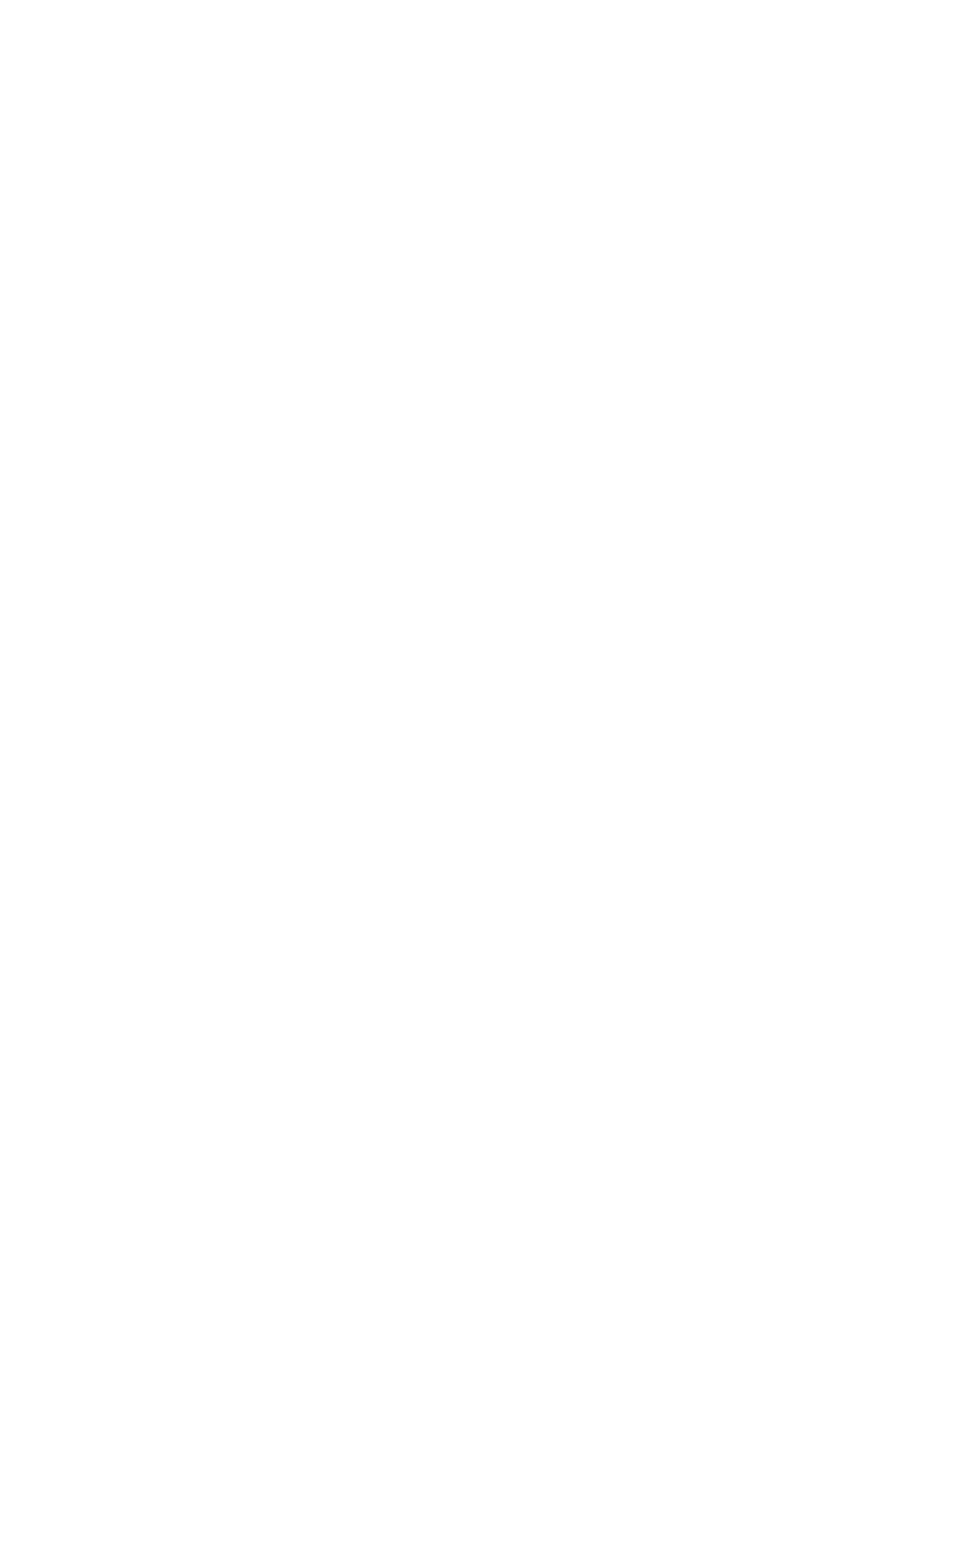 Salvatore Ferragamo logo for dark backgrounds (transparent PNG)